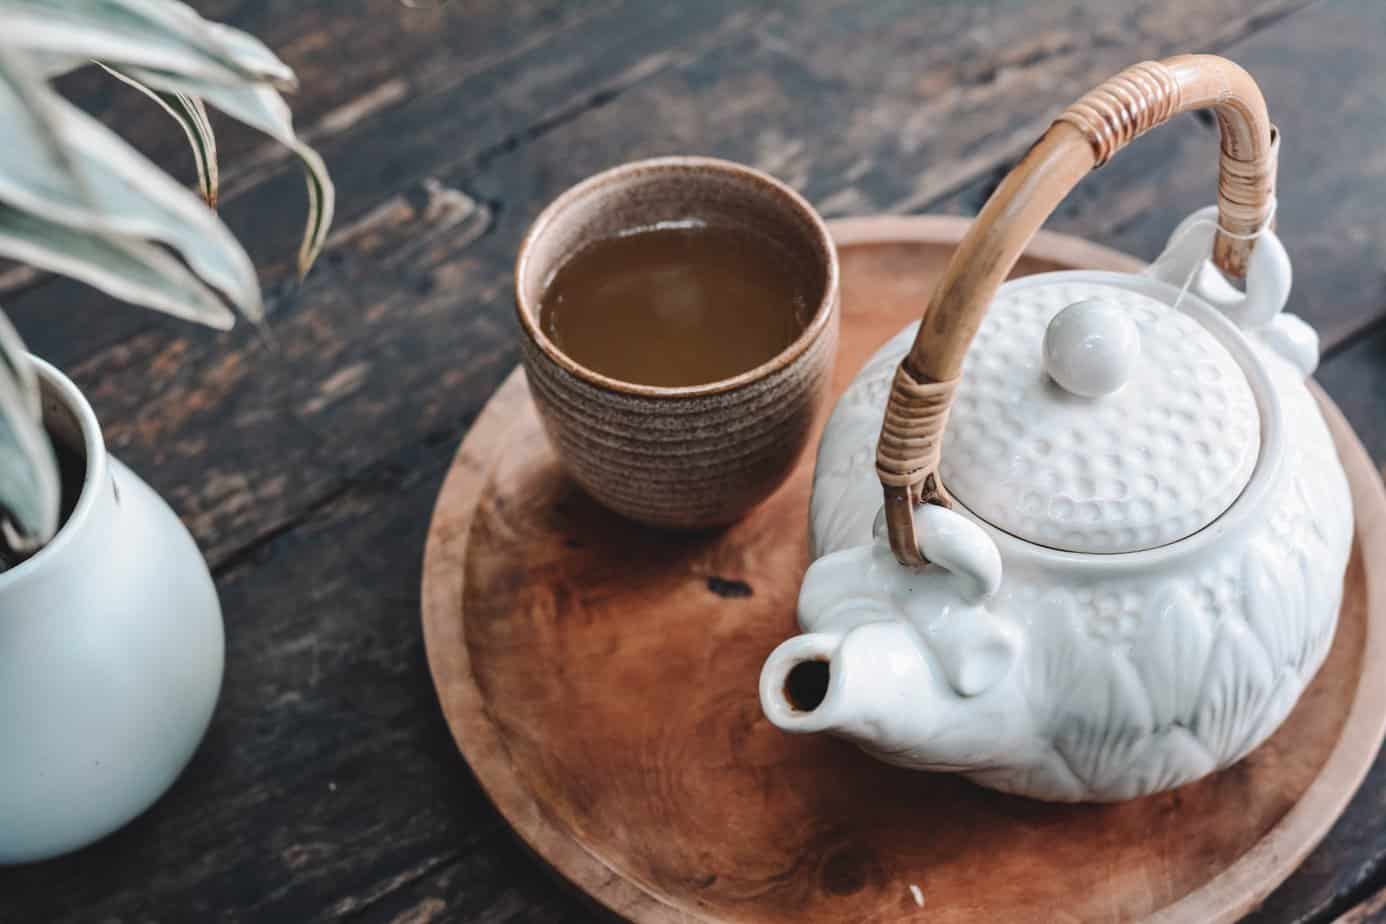 Chaga Mushroom Tea: Benefits and How to Make It